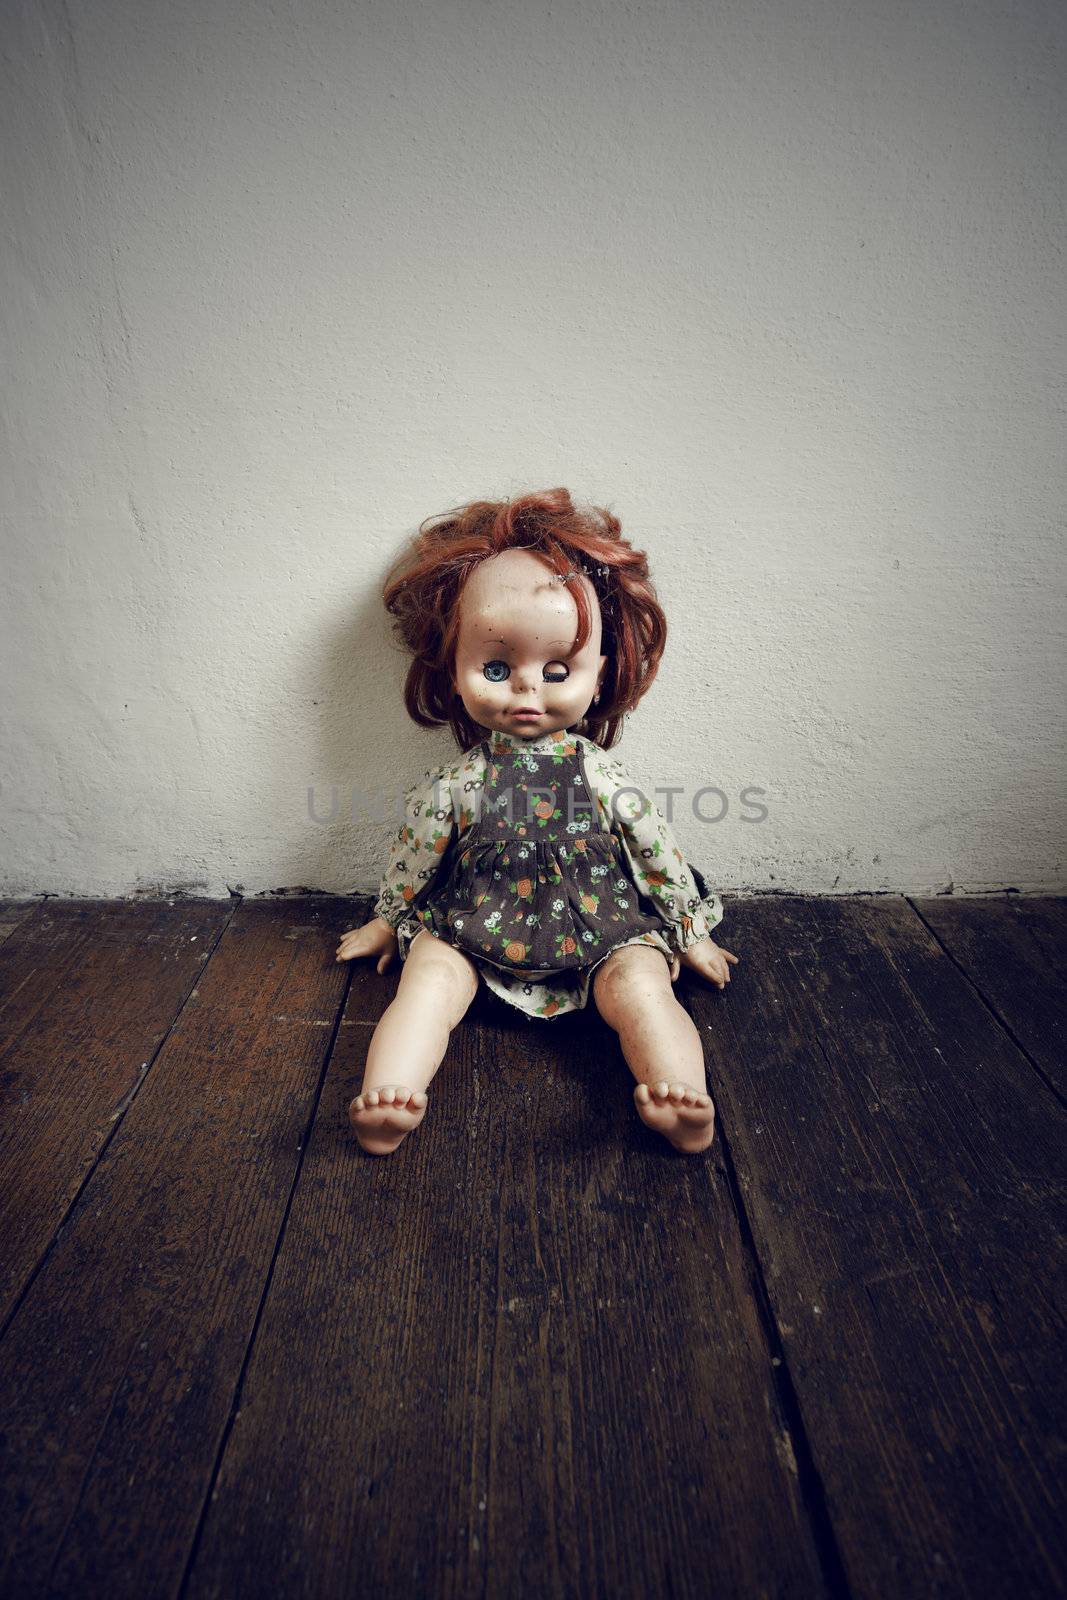 Damaged Vintage Doll by stokkete